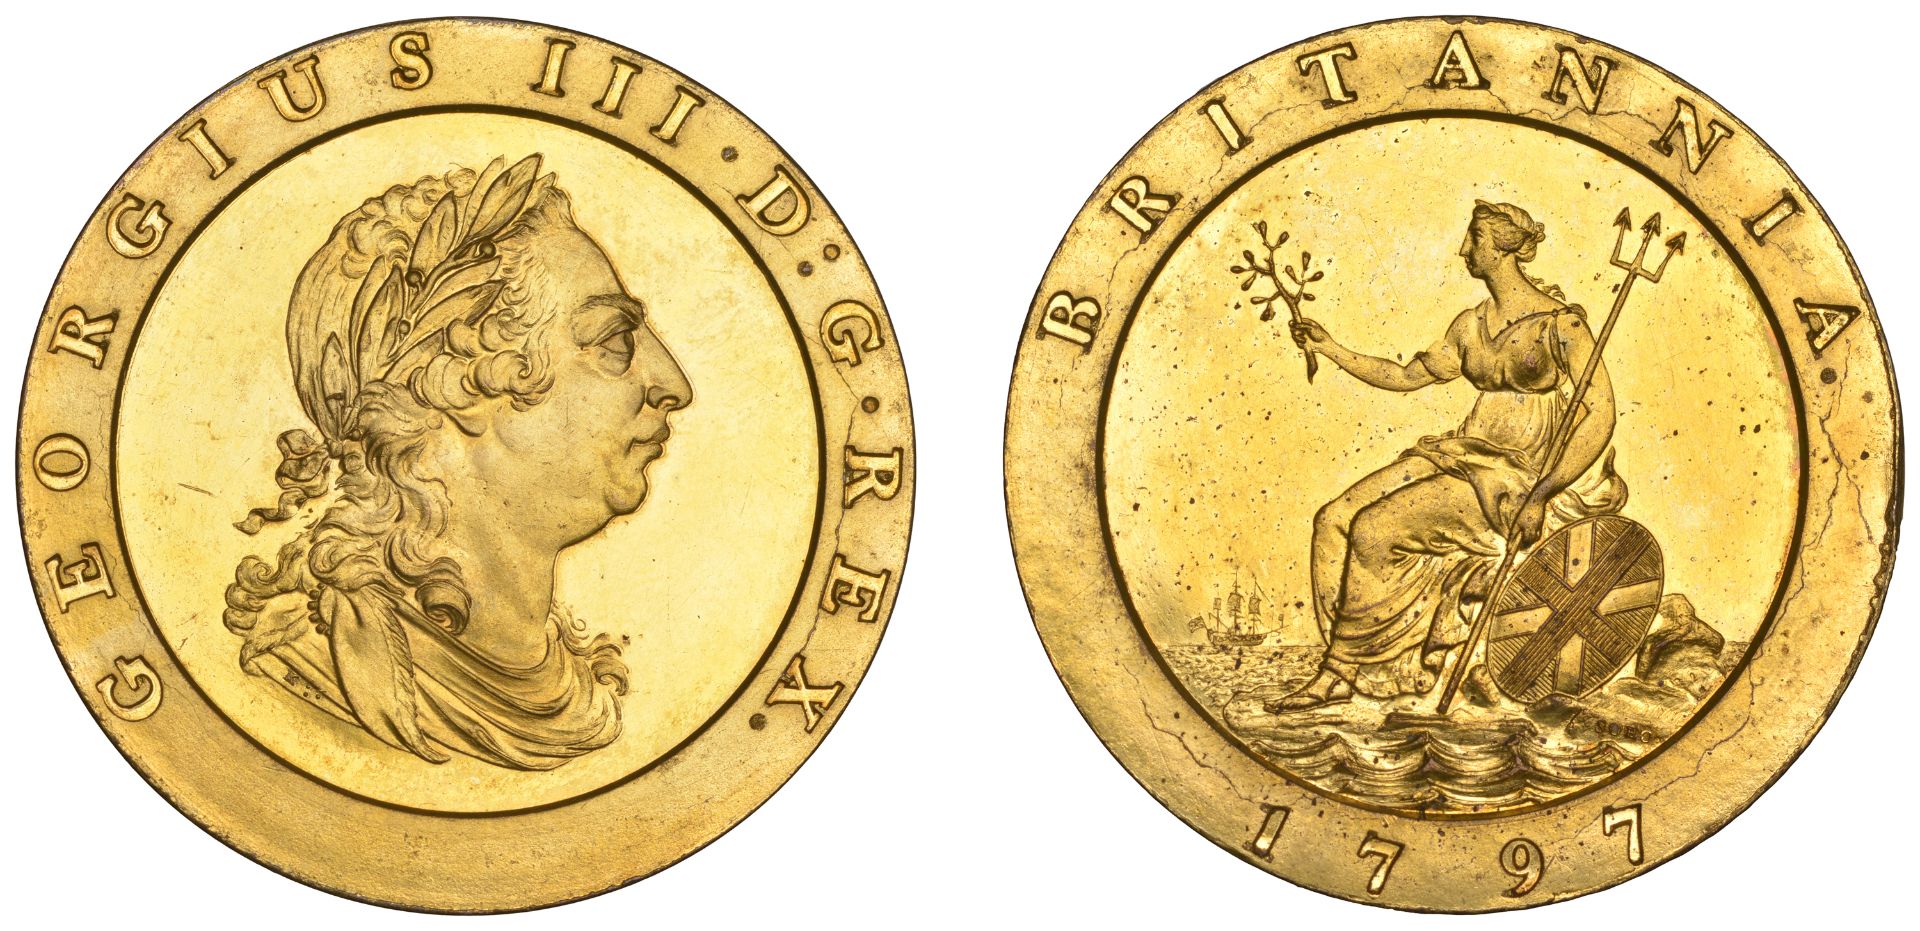 George III (1760-1820), Soho Mint, Birmingham, Proof Twopence, 1797 (late Soho), in gilt-cop...